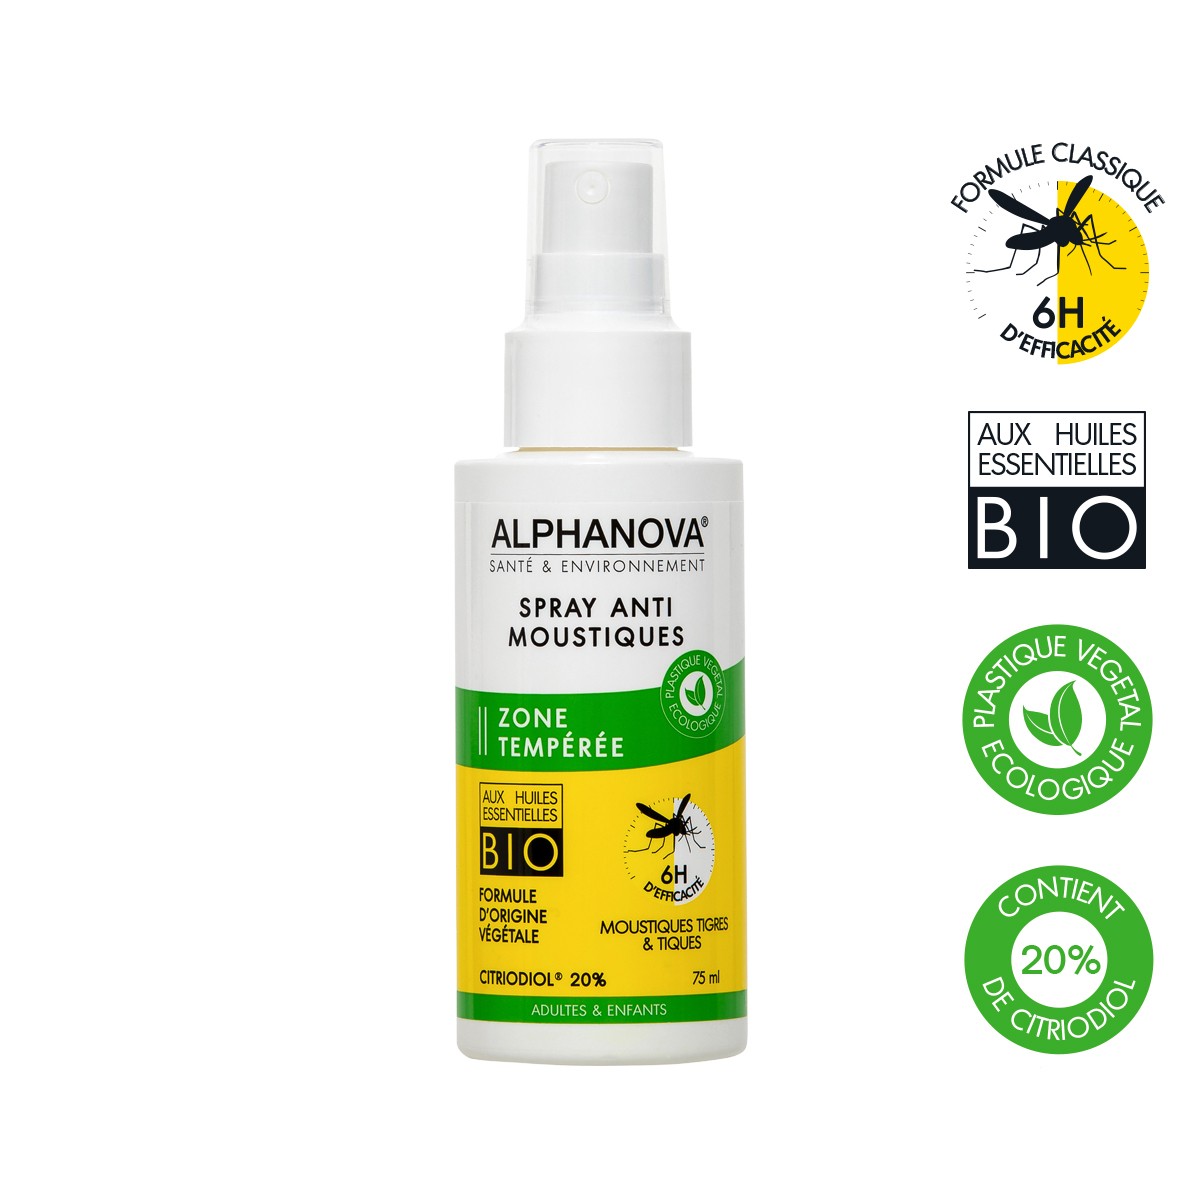 Spray Anti-Moustique, Flacon aérosol 250 ml - Masoala Laboratoire